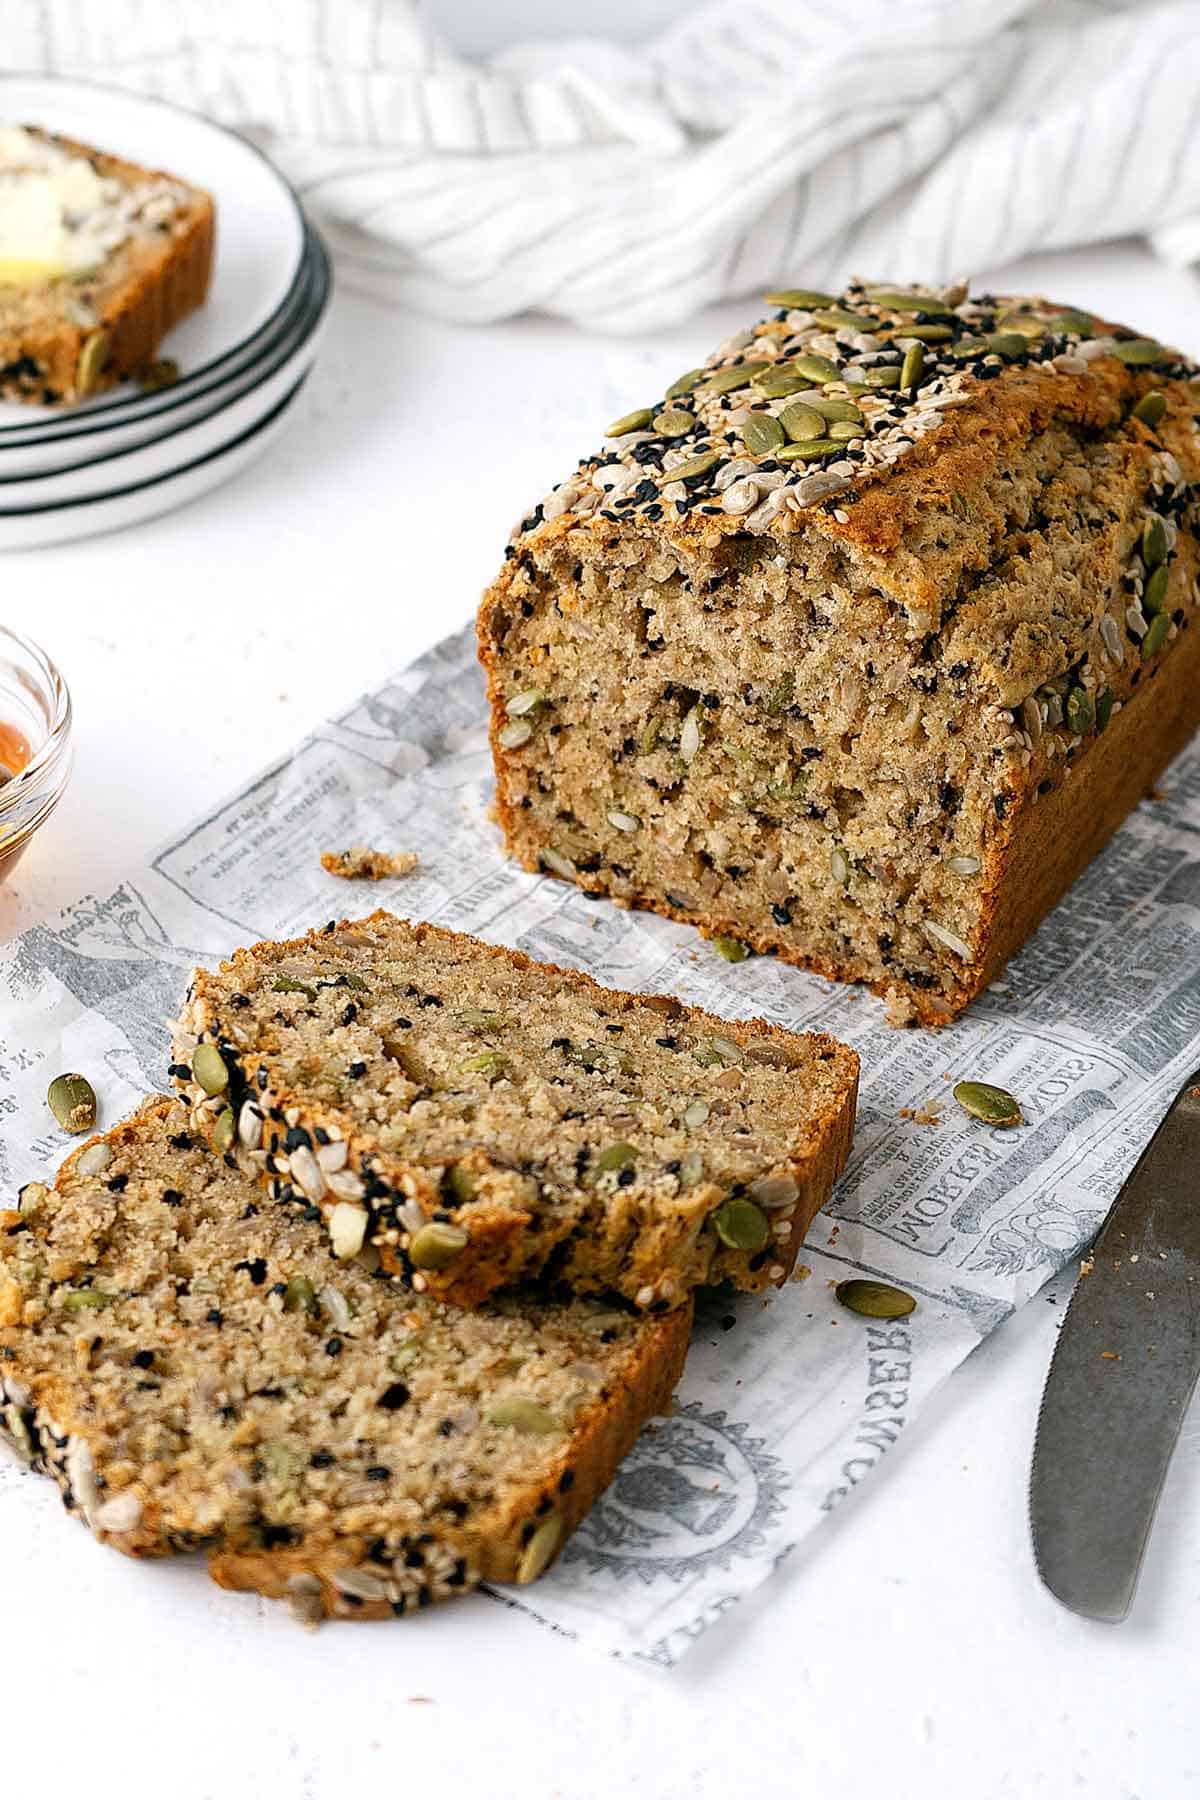 https://www.elmundoeats.com/wp-content/uploads/2021/01/Fast-no-knead-multi-seed-bread-slices-with-half-loaf.jpg